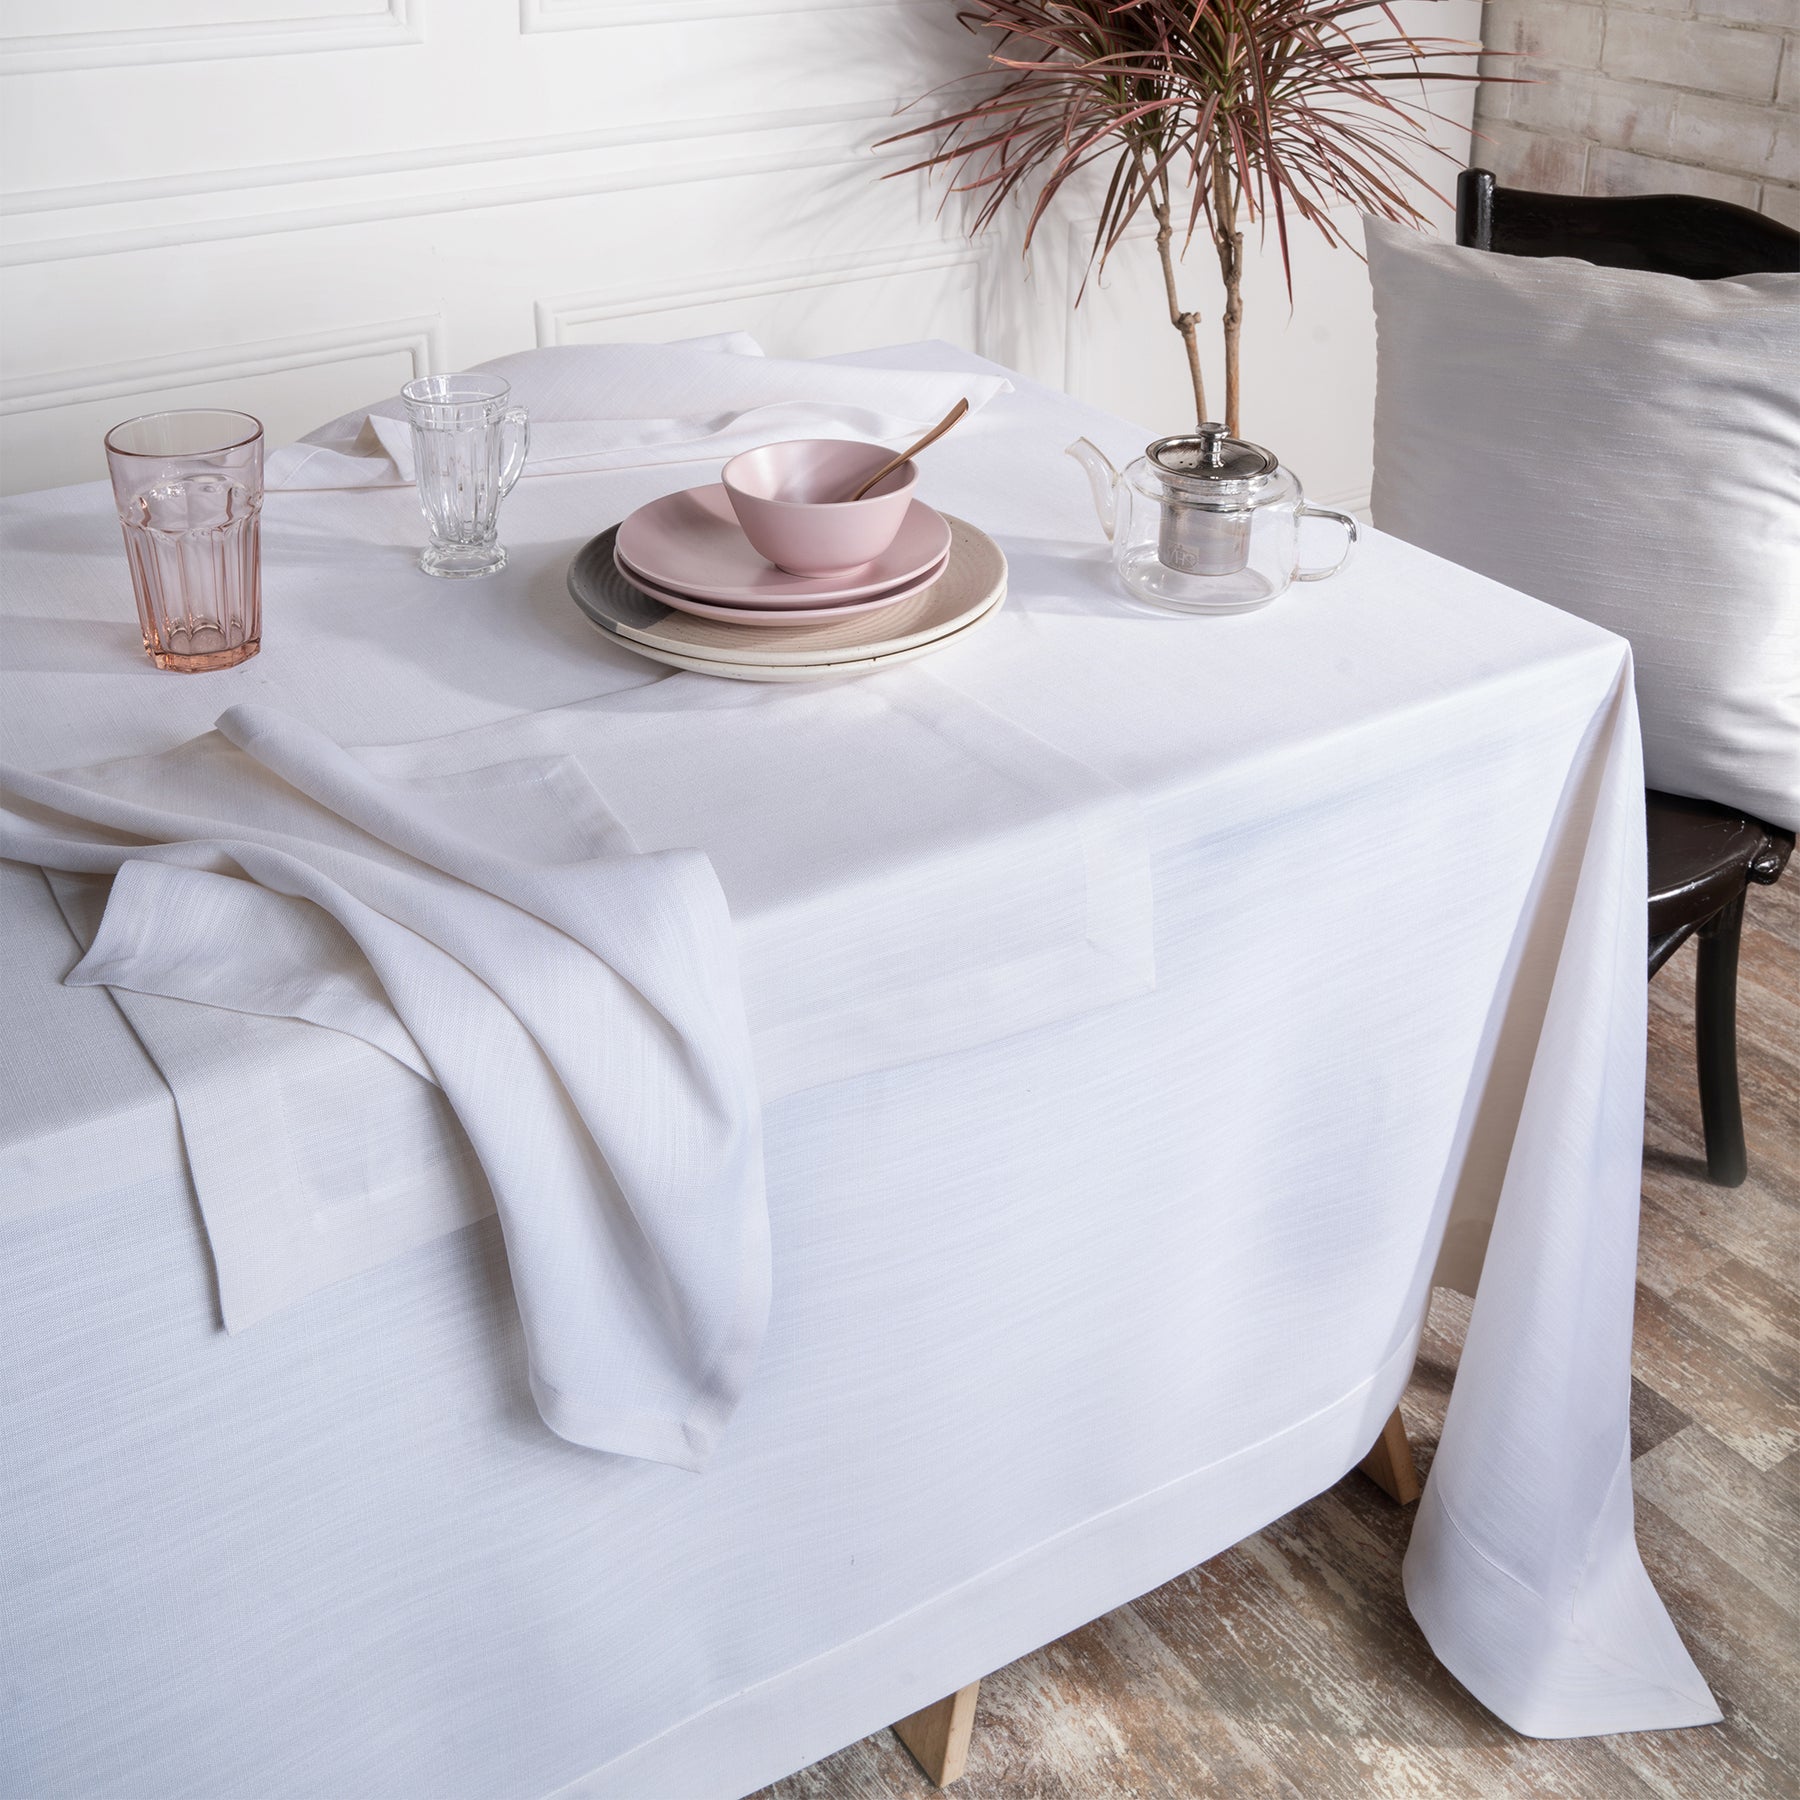 Chambray Cream & White Faux Linen Tablecloth - Mitered Corner